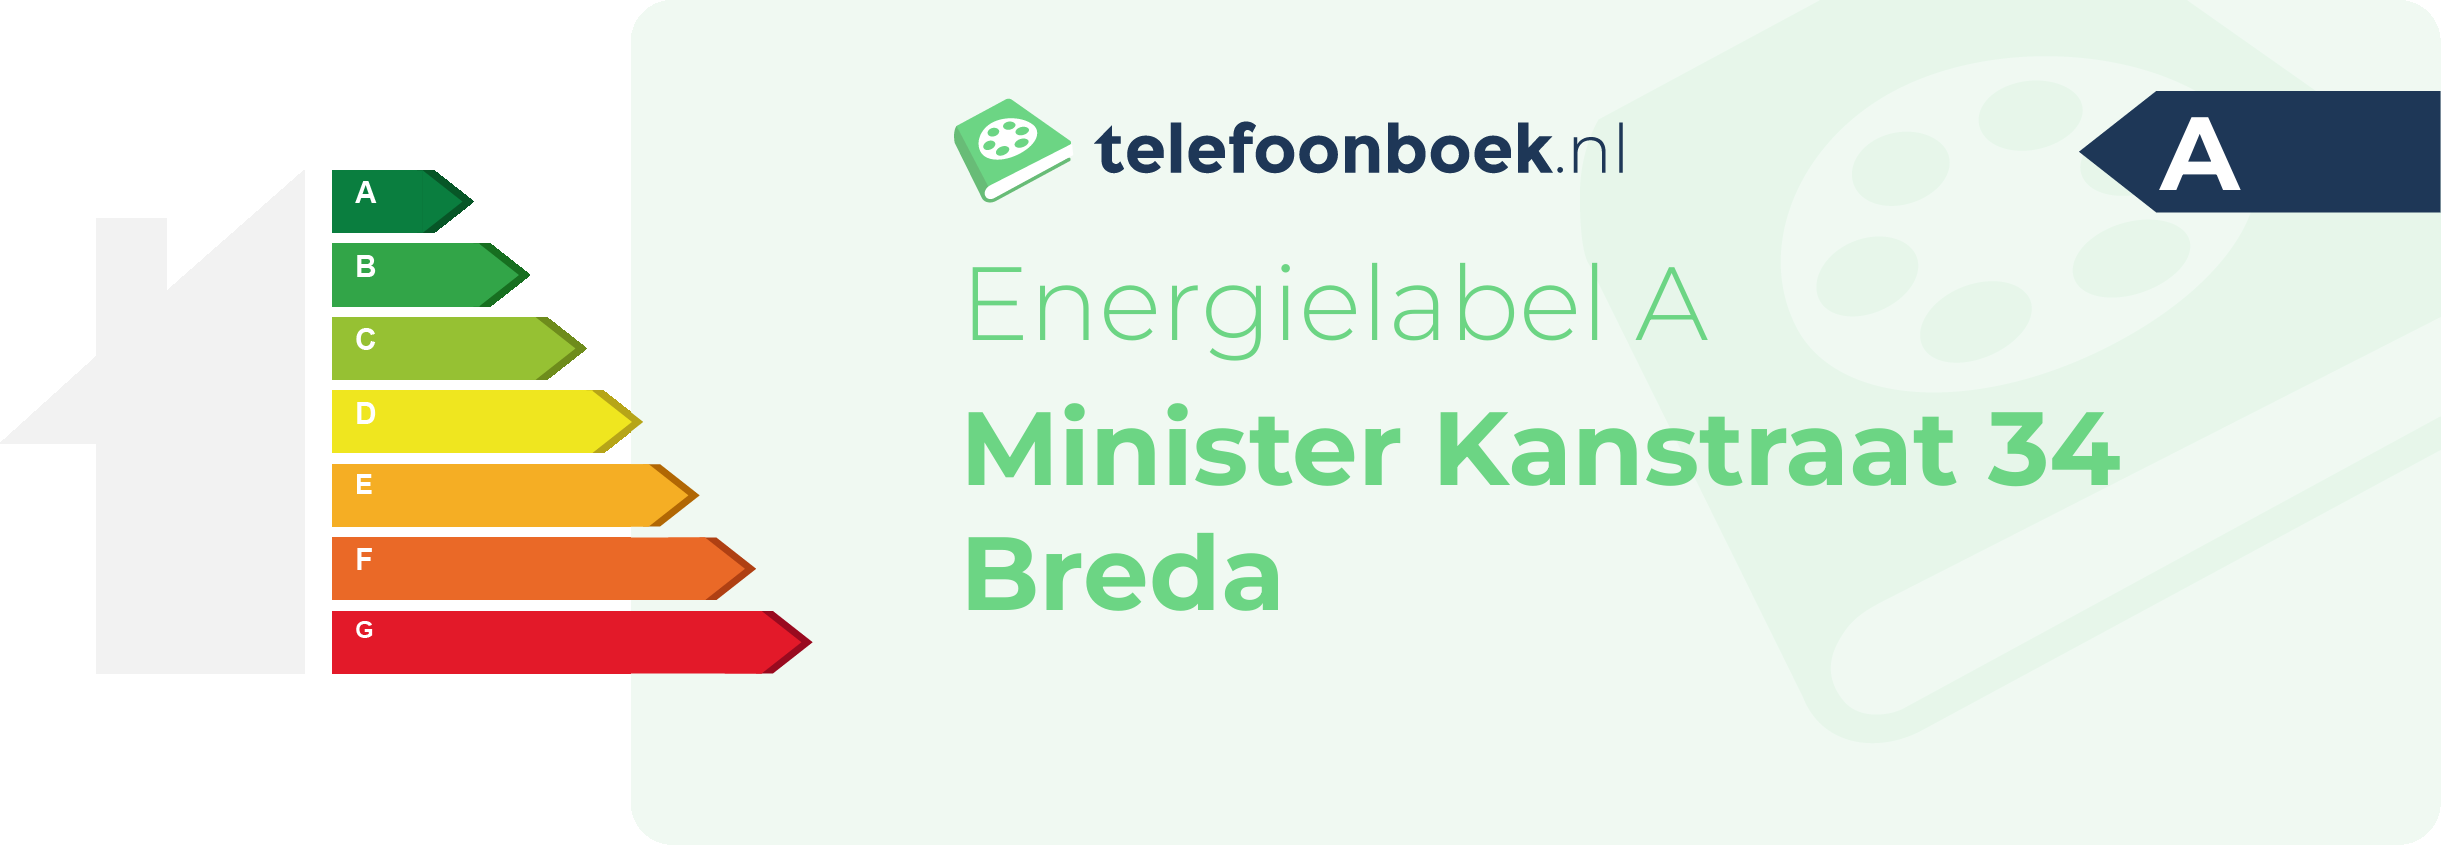 Energielabel Minister Kanstraat 34 Breda